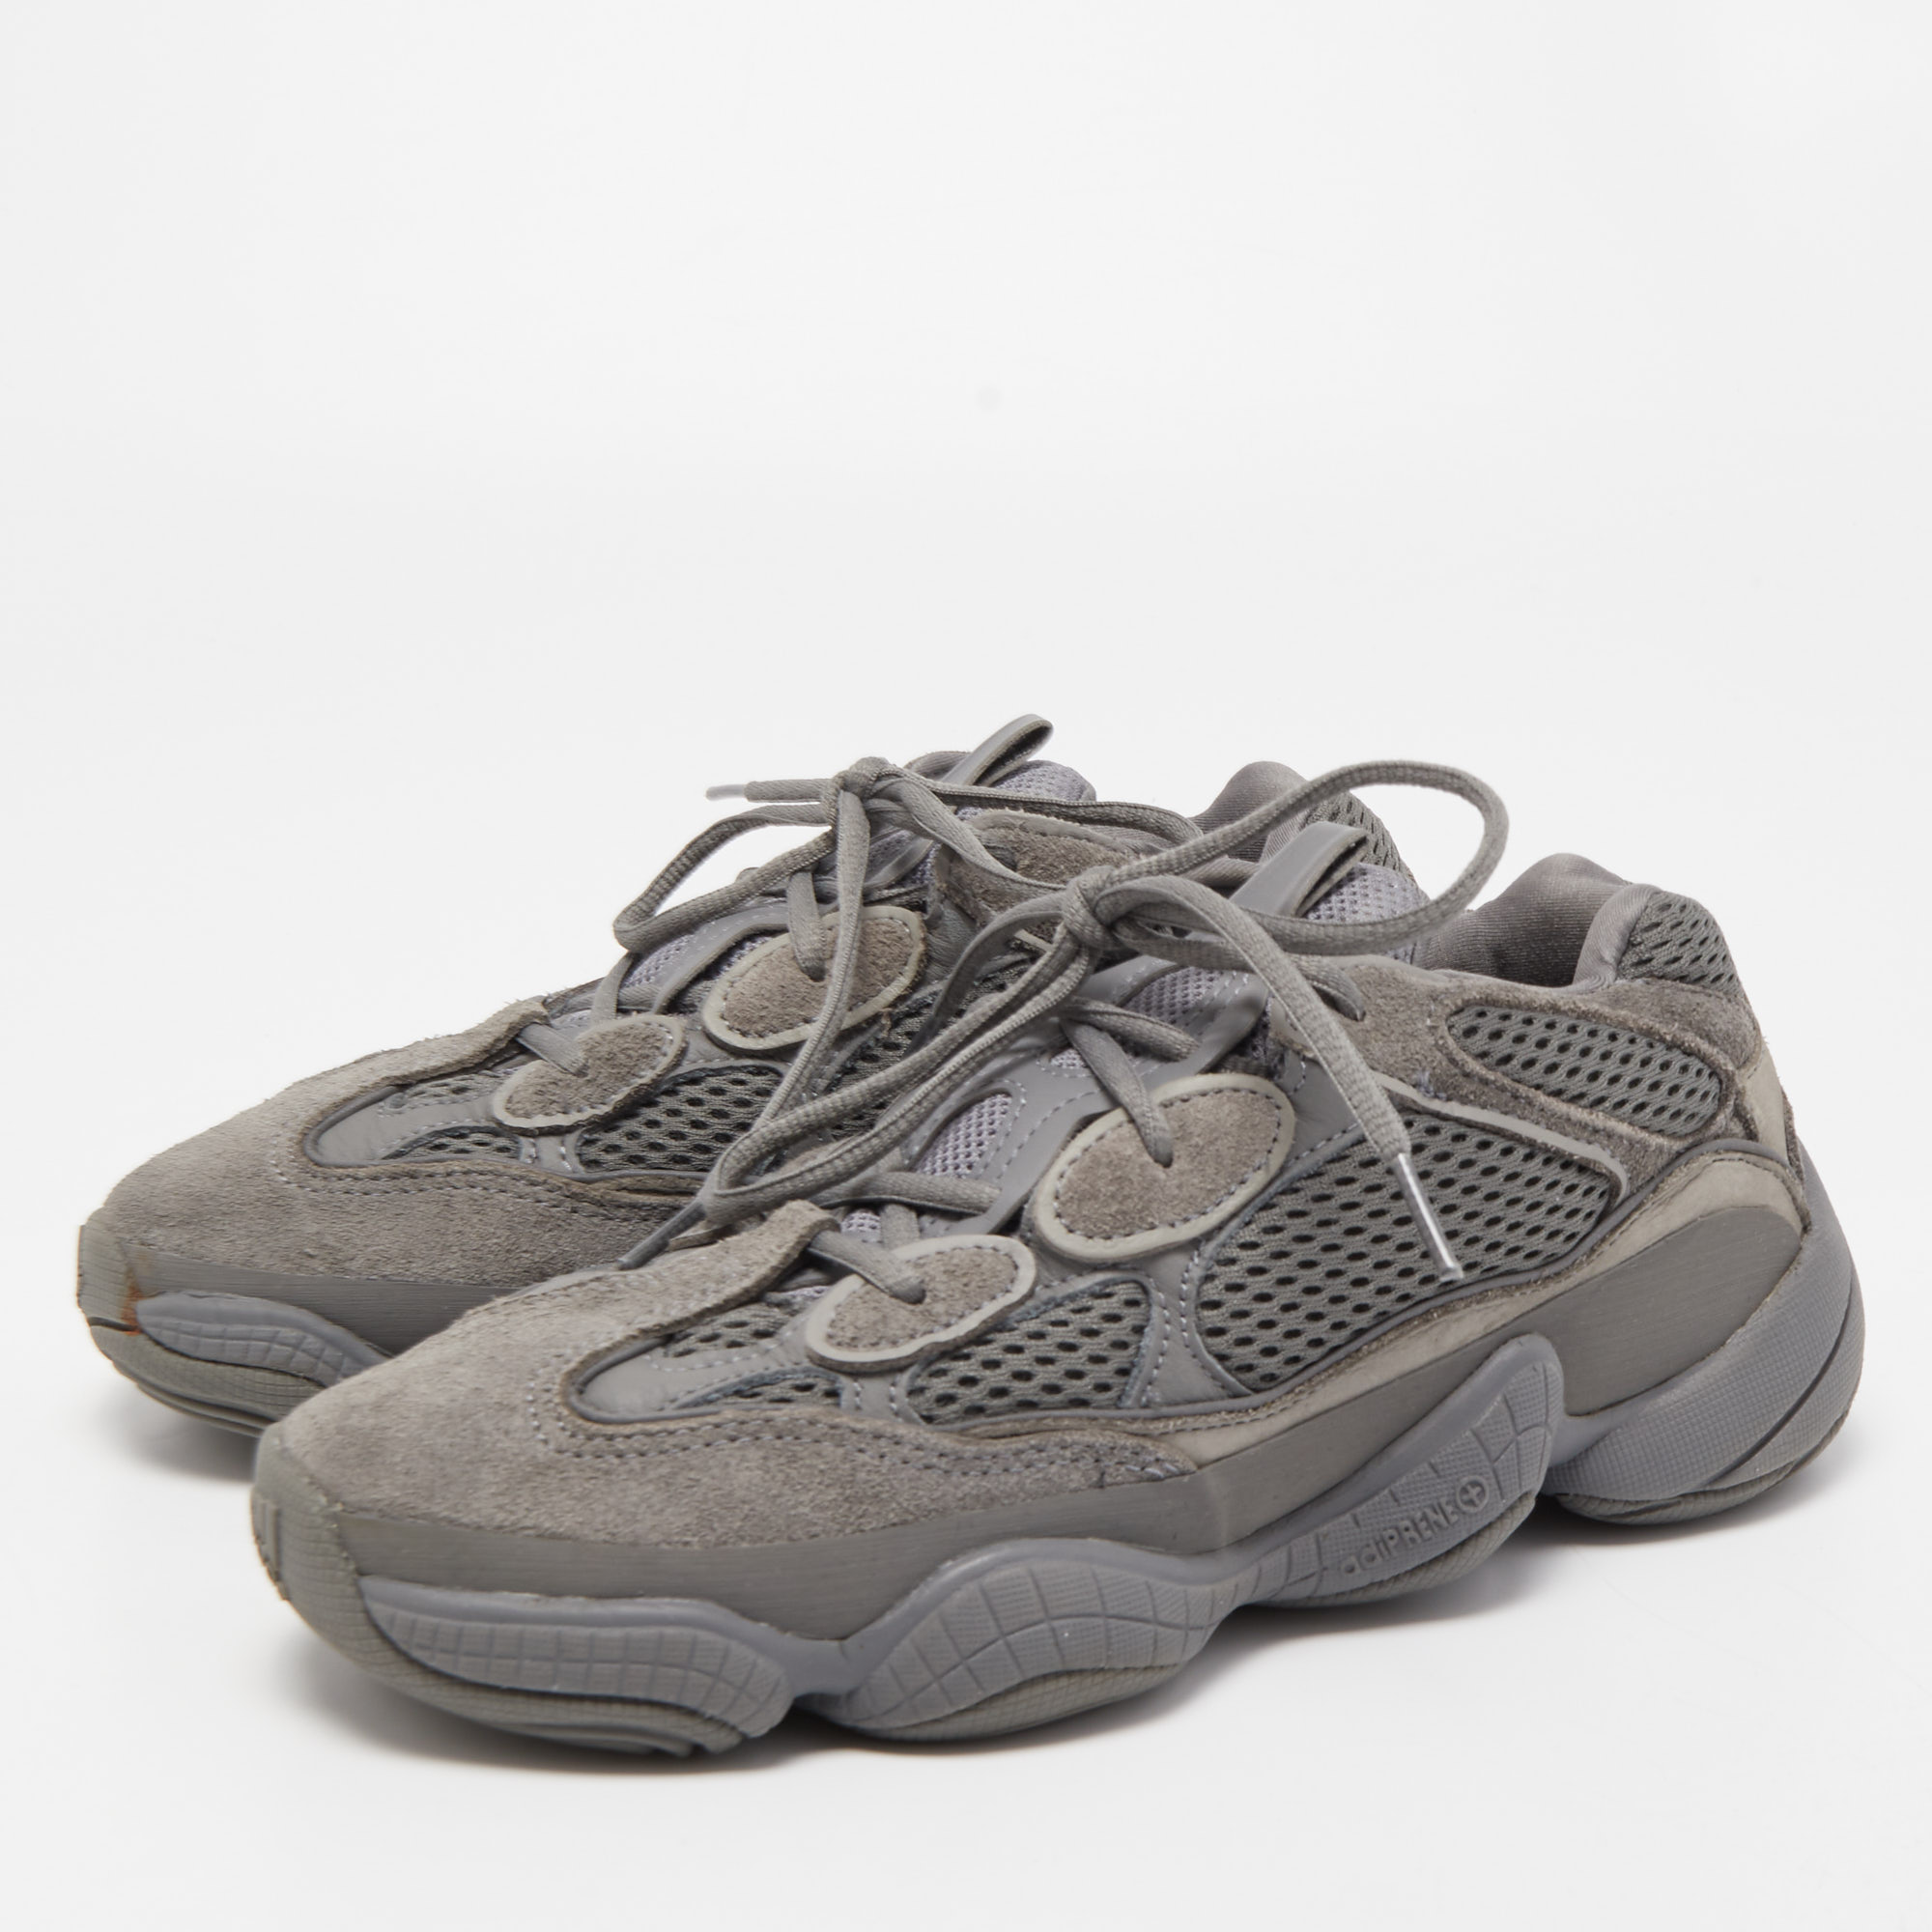 

Yeezy x Adidas Grey Suede and Mesh Yeezy 500 Granite Sneakers Size